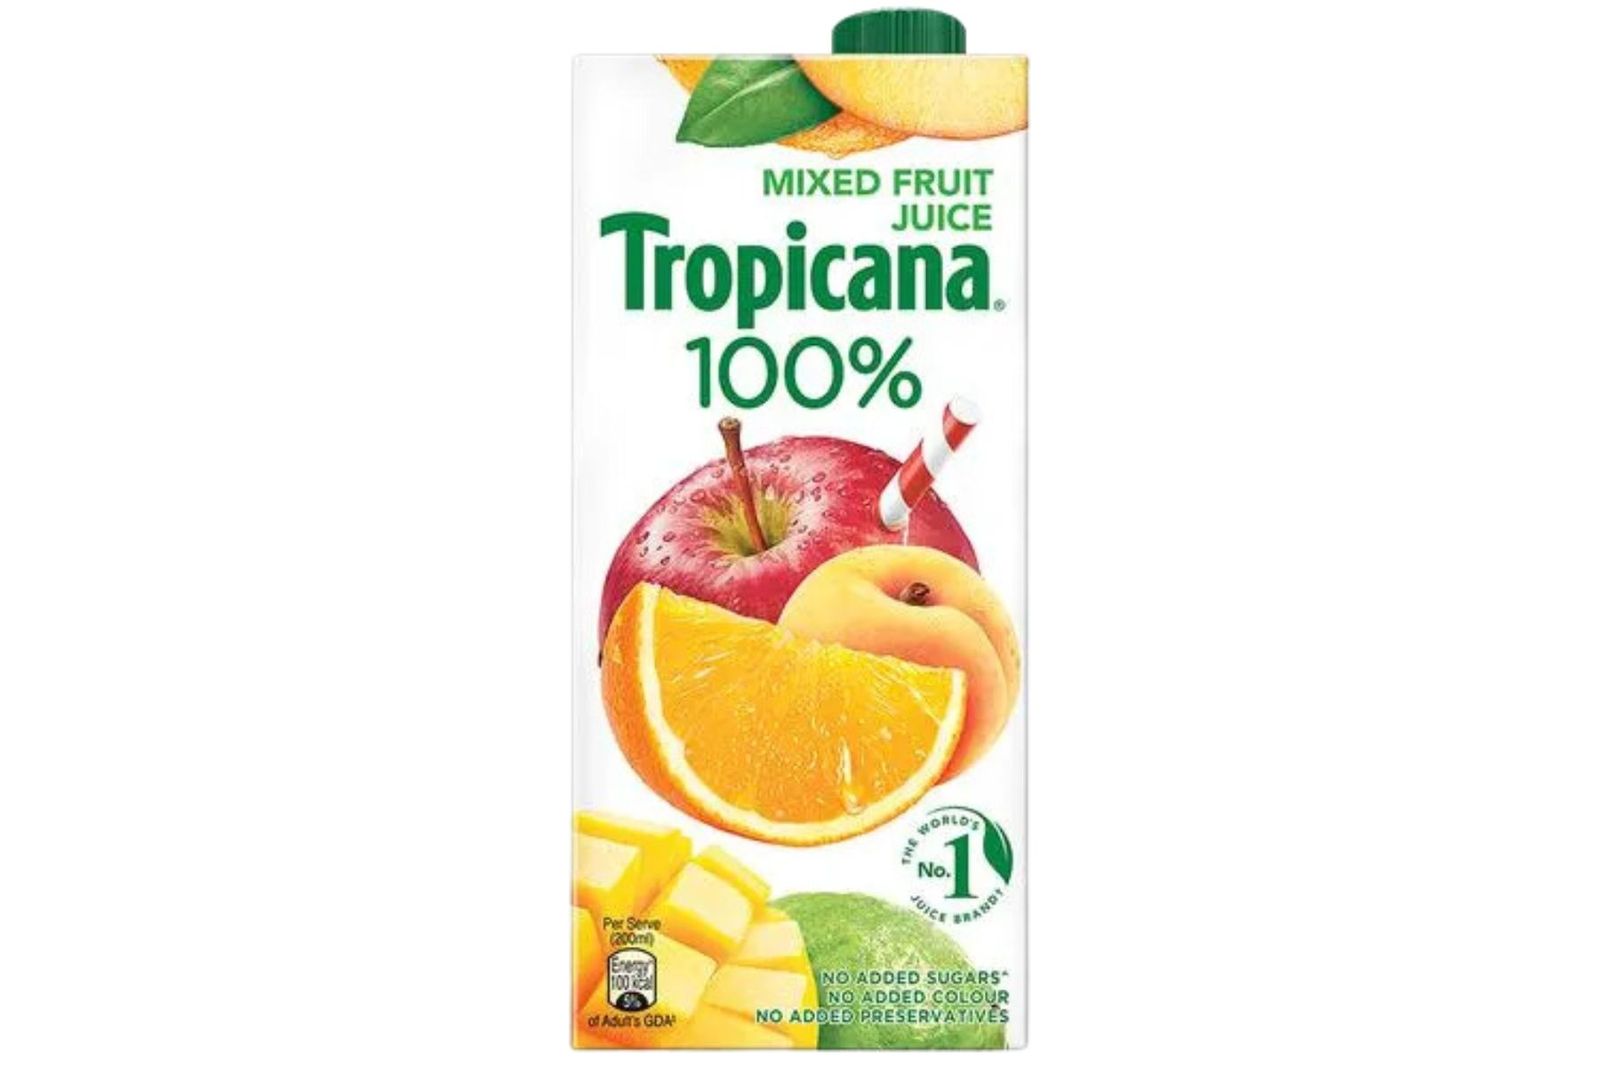 Tropicana 100% Mixed Fruit Juice Terta Pack